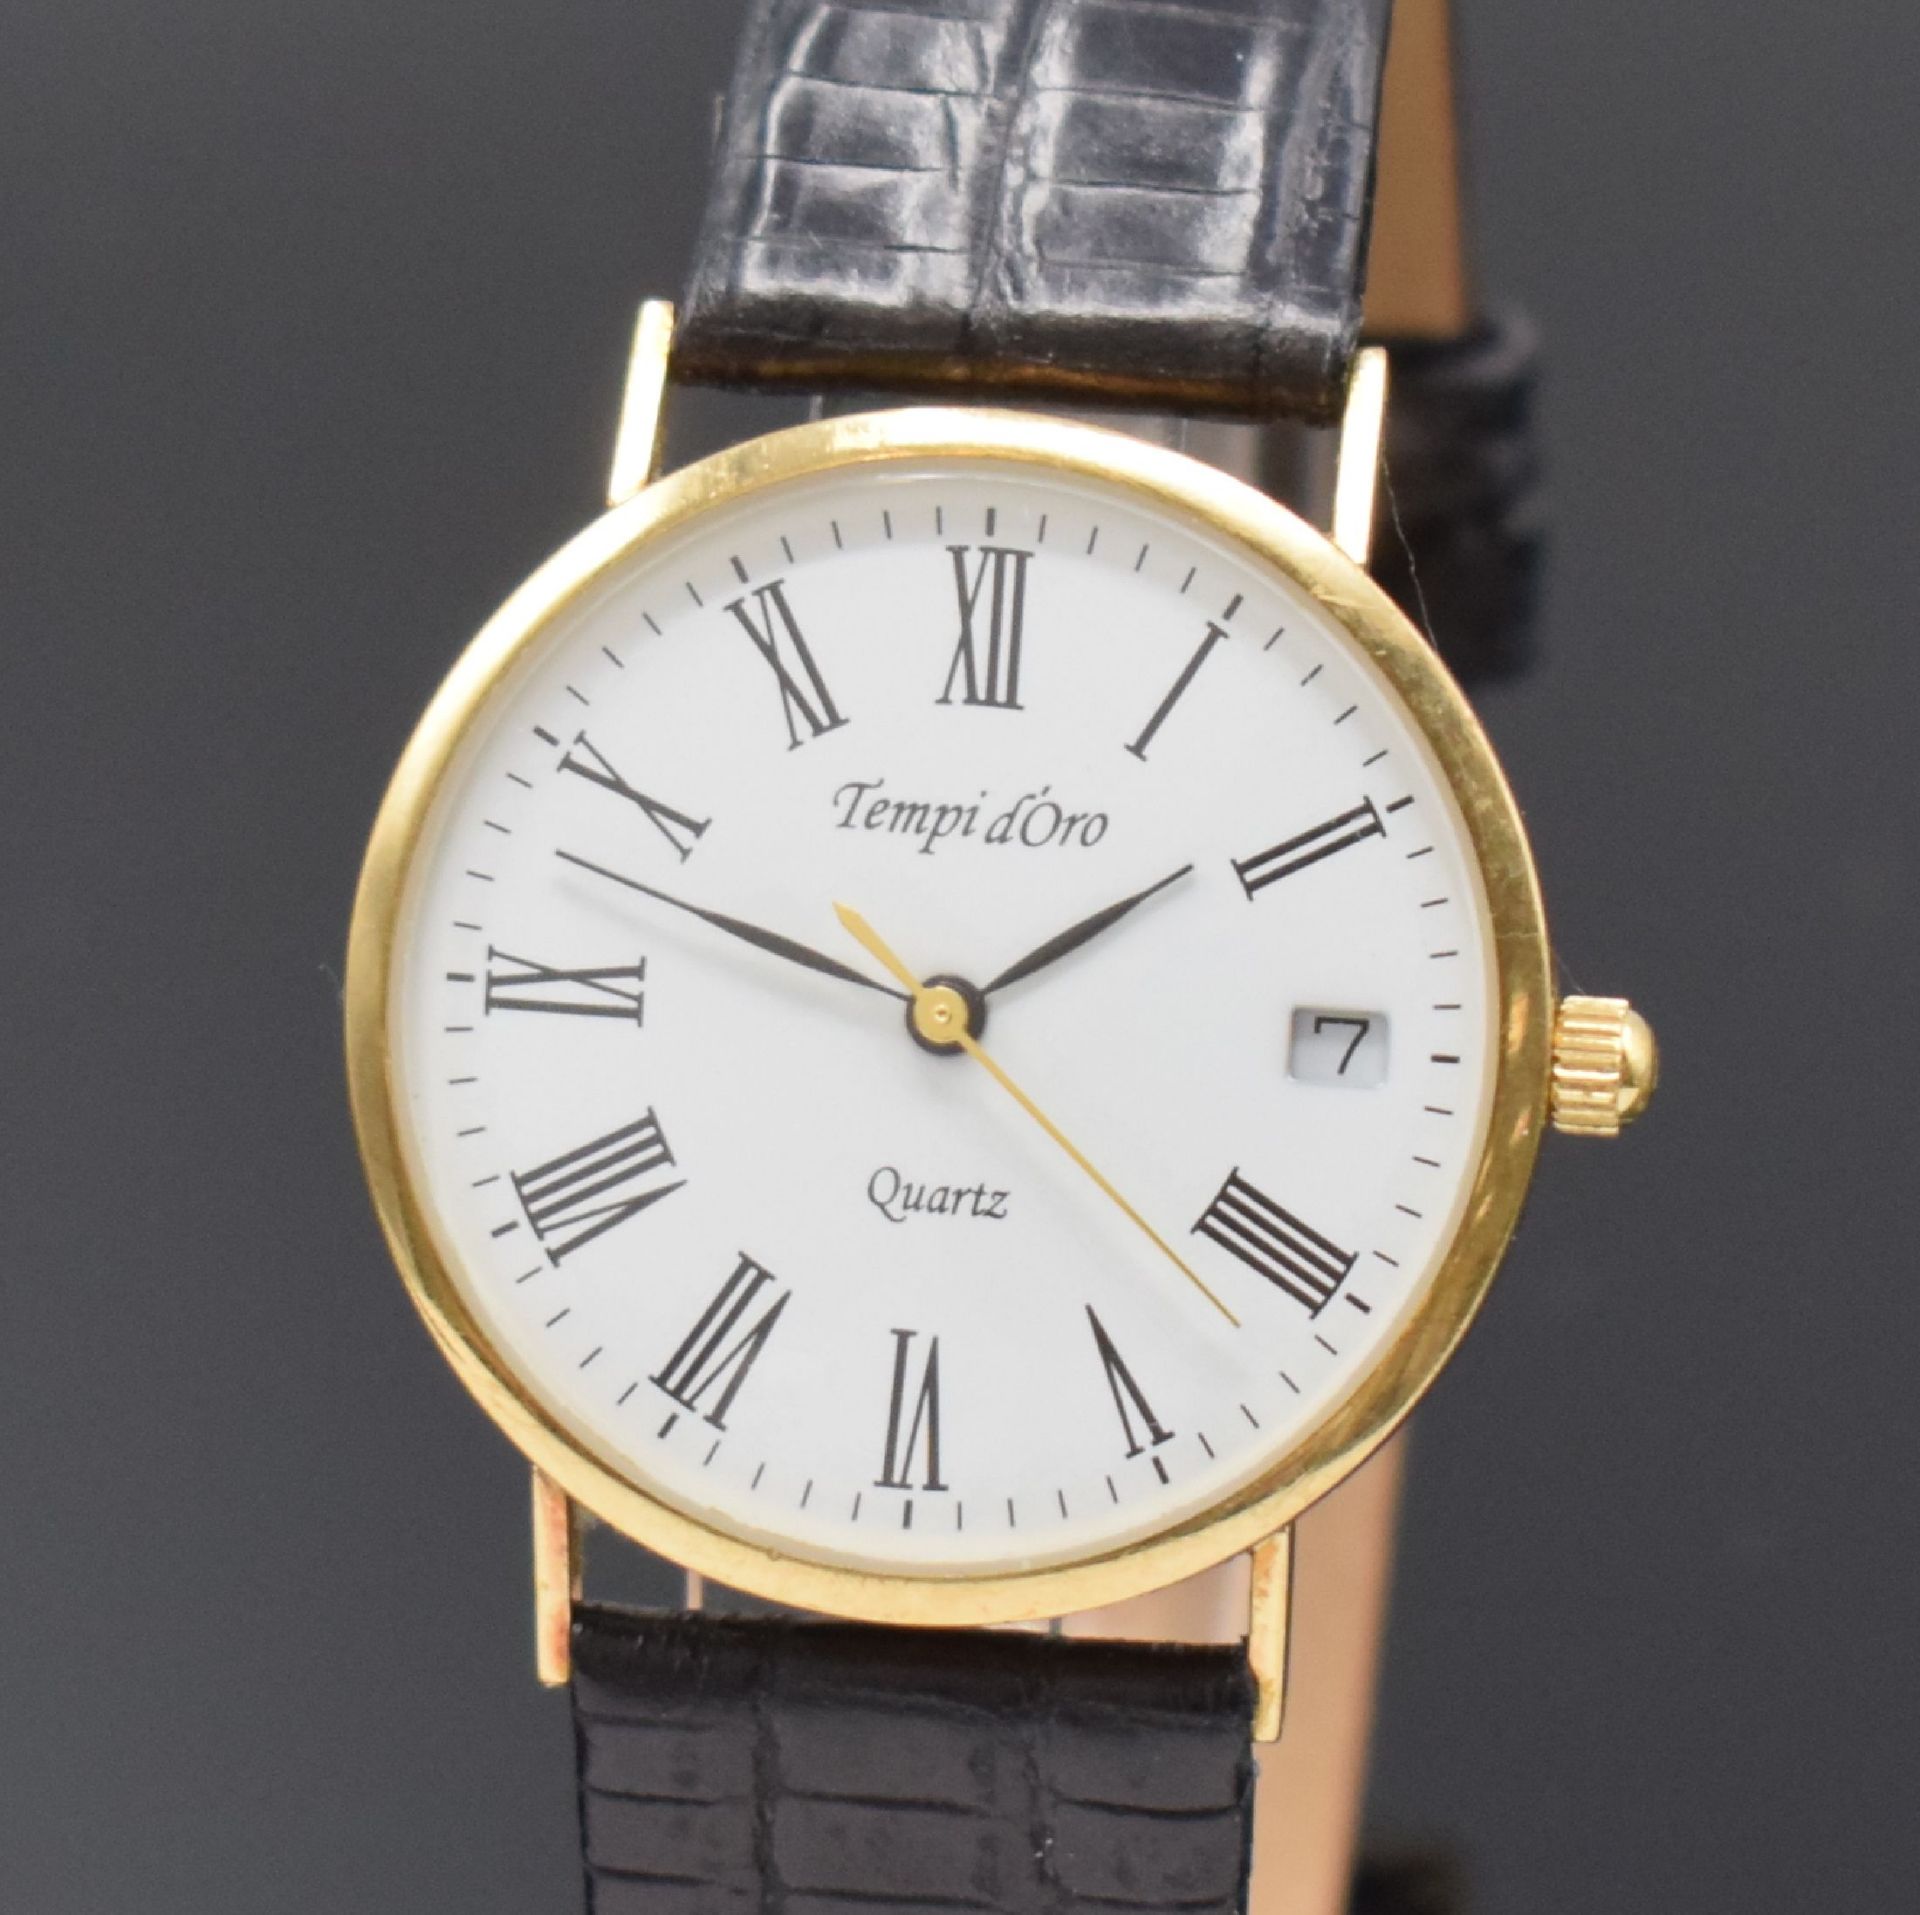 TEMPI D'ORO Armbanduhr in GG 375/000, Schweiz um 2010, - Bild 2 aus 4